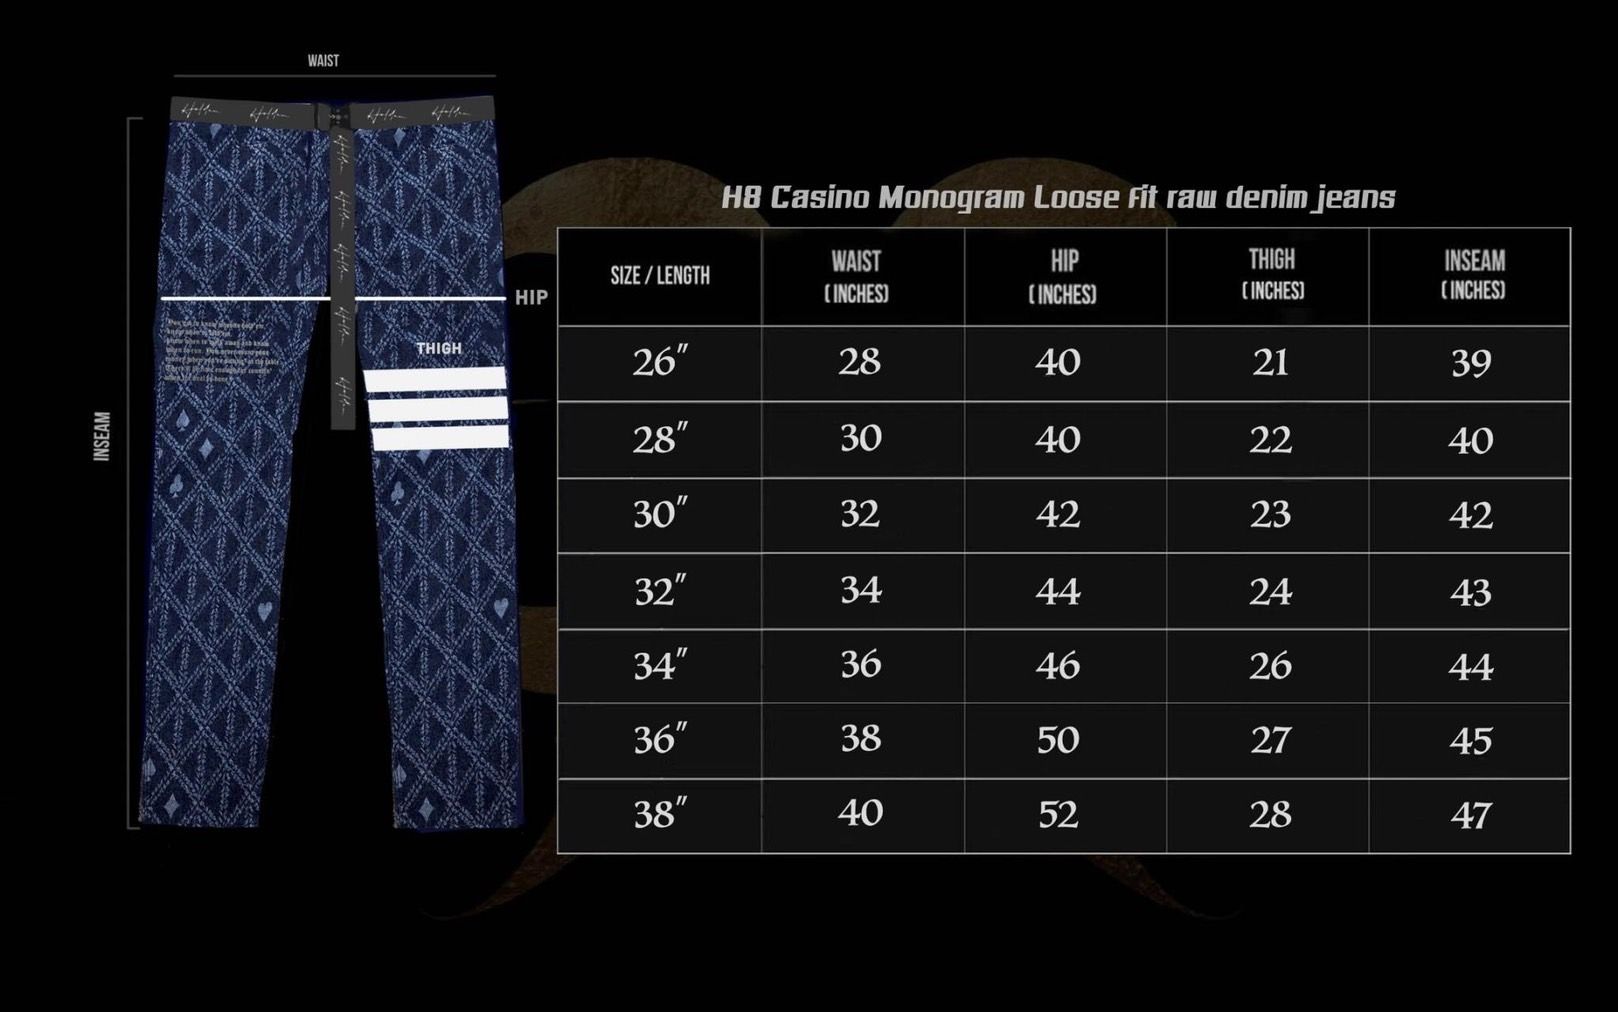 H8 Casino Monogram Loose fit raw denim jeans